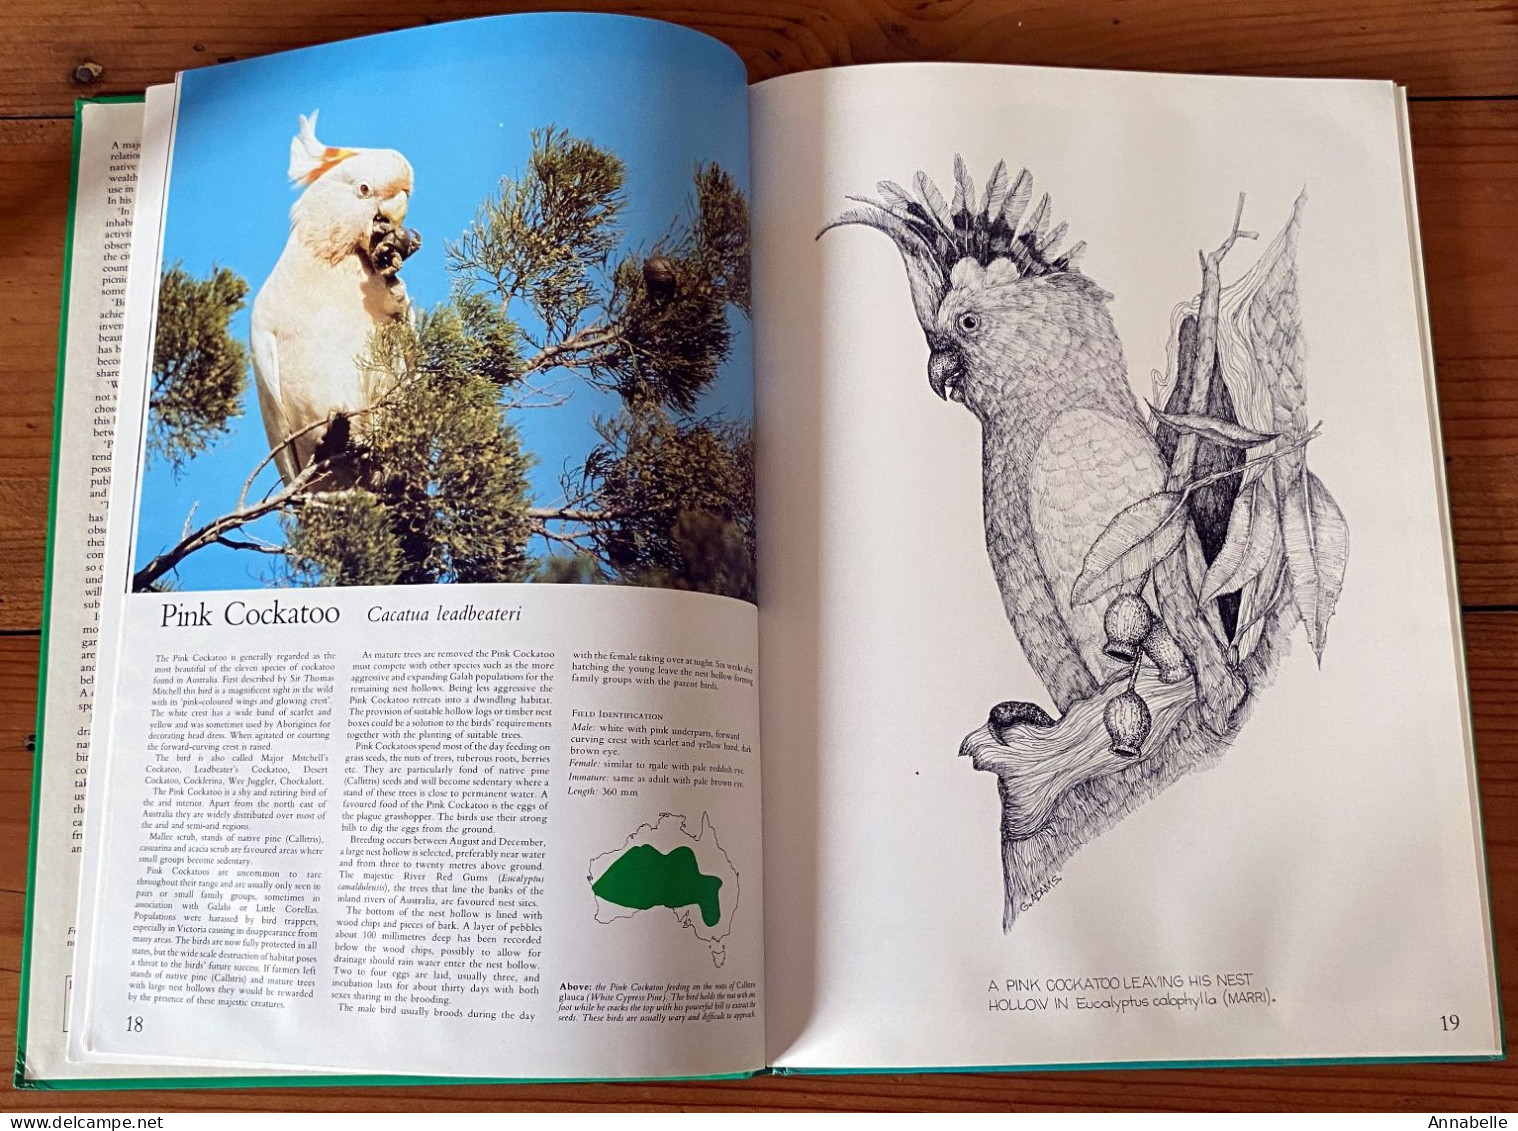 Foliage Birds : Australian Birds And Their Favoured Plants Par George Martin Adams (1981) Livre En Anglais - Animales